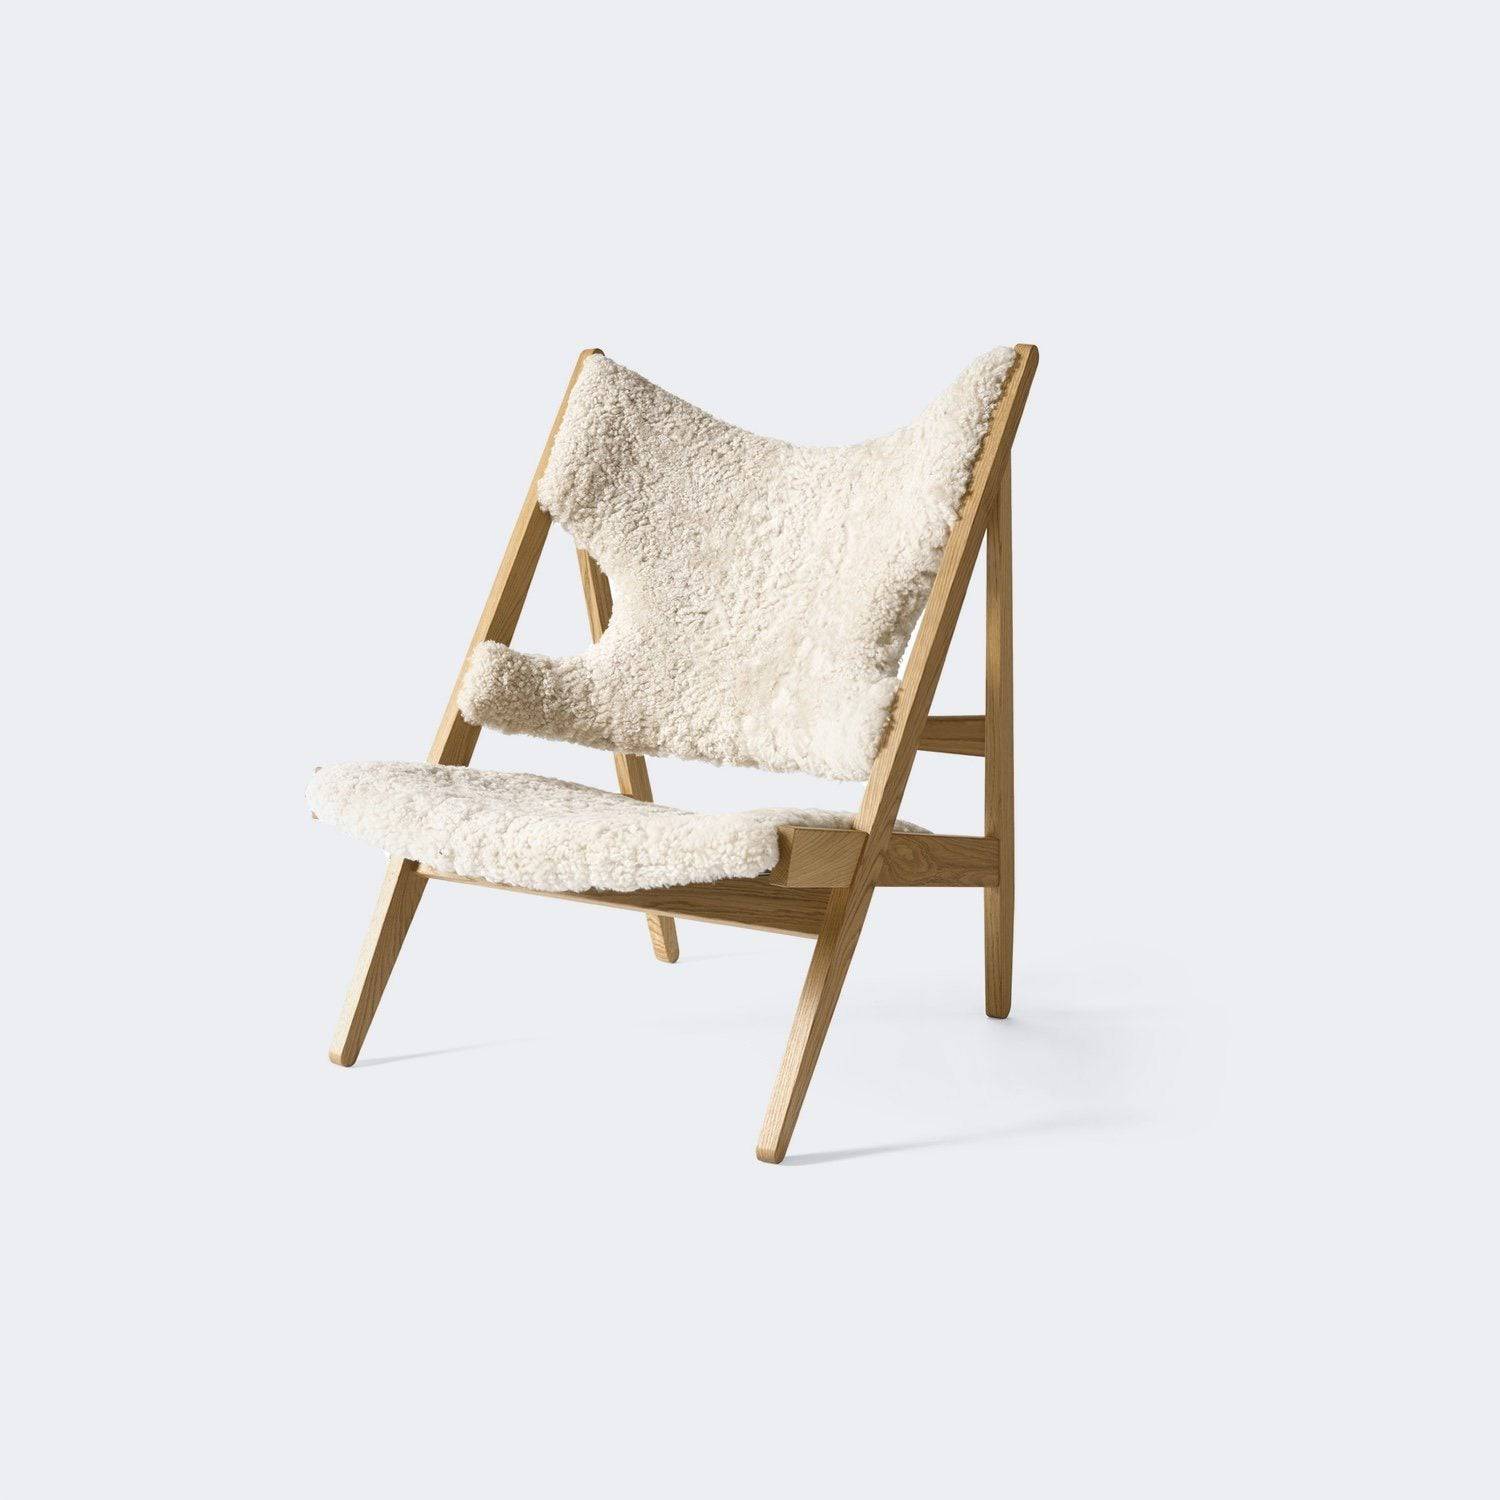 Audo Copenhagen Knitting Chair, Sheepskin Upholstery Ready To Ship Natural Oak/Nature - KANSO#Frame/Fabric Color_Natural Oak/Nature